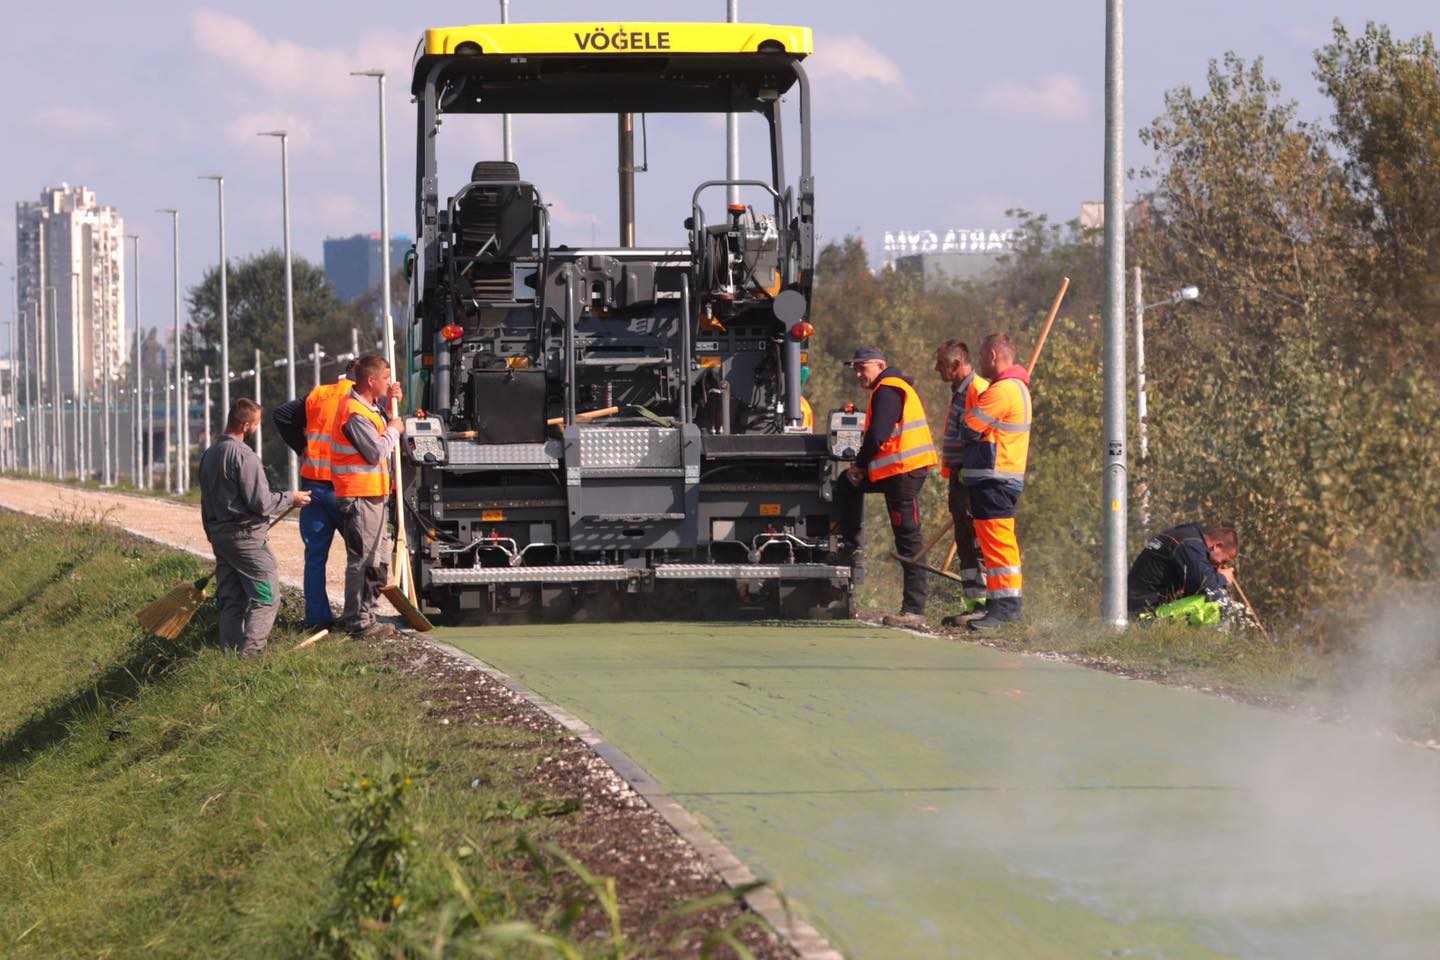 Croatia’s first green asphalt bikeway being laid 